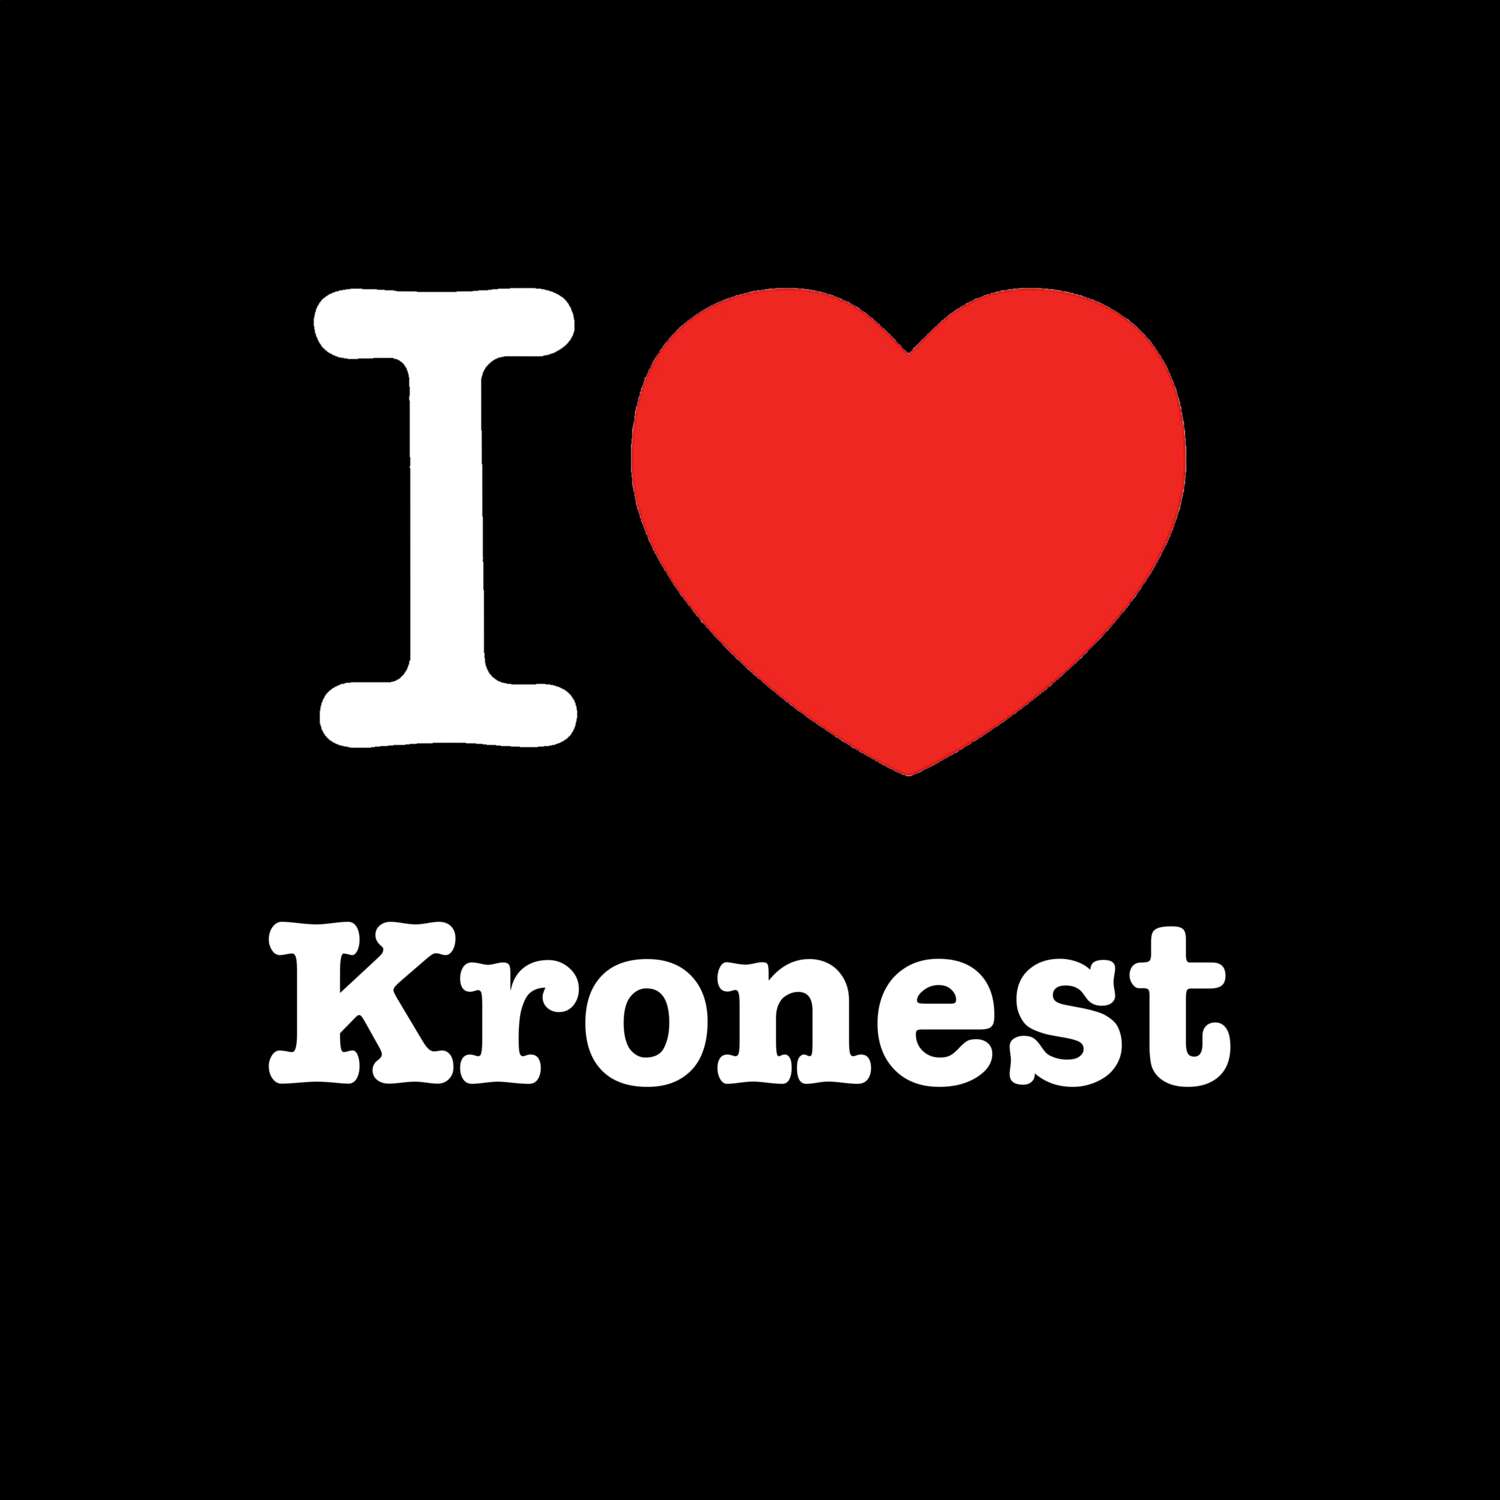 Kronest T-Shirt »I love«